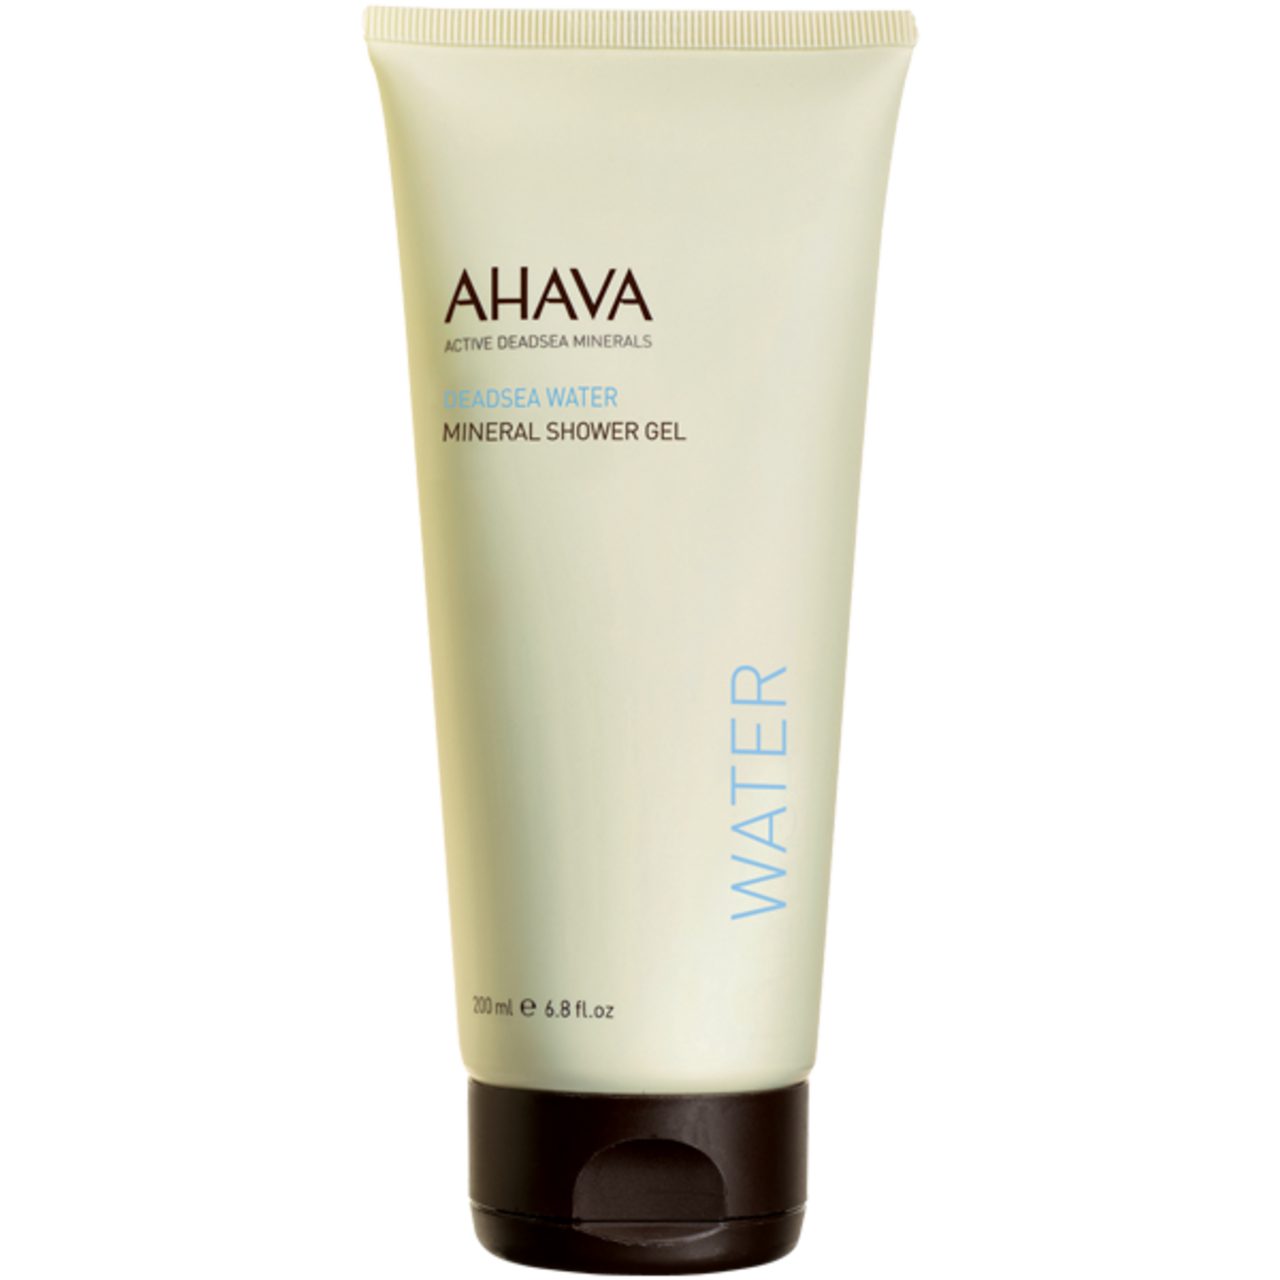 AHAVA Cosmetics GmbH Körperpflegemittel Deadsea Water Mineral Shower Gel